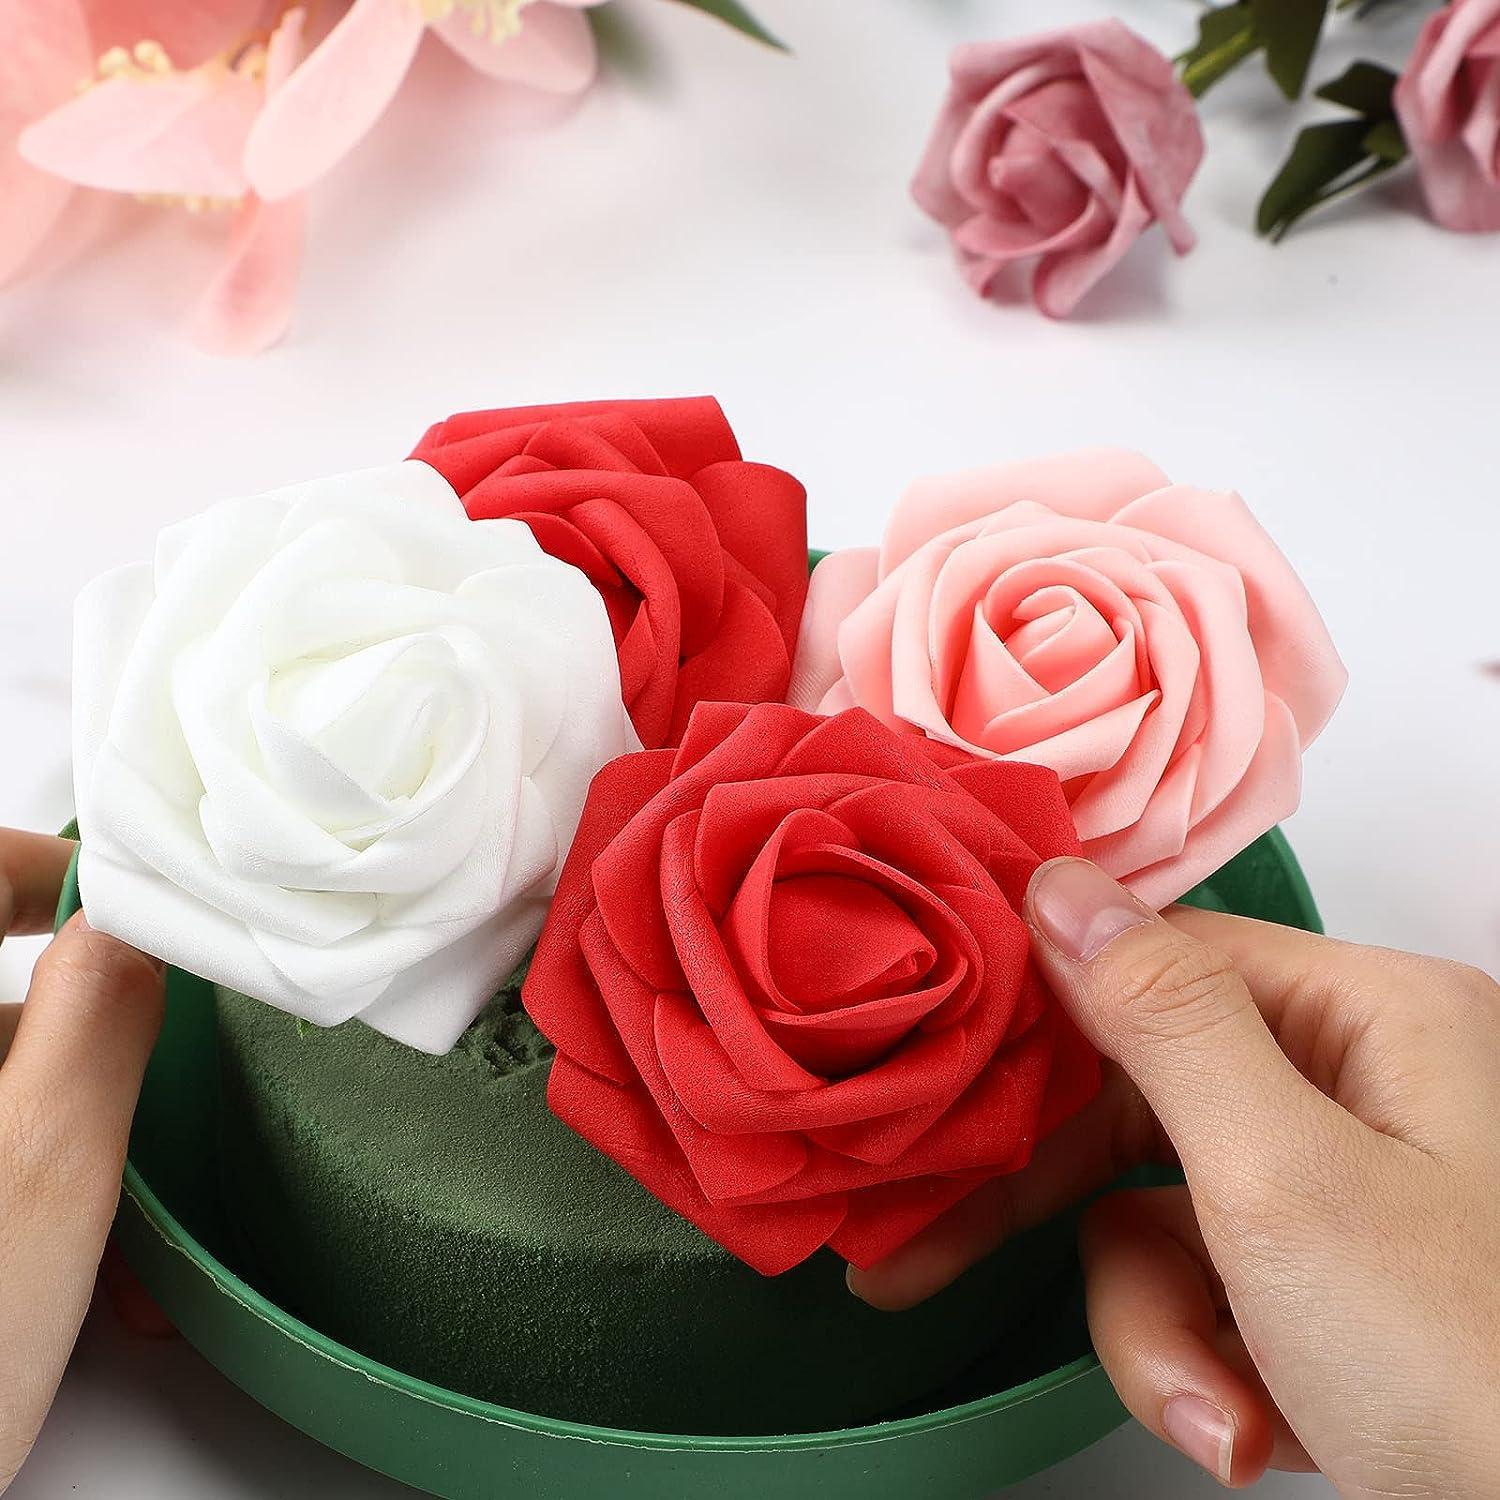 DIY Wedding Floral Supply Kit